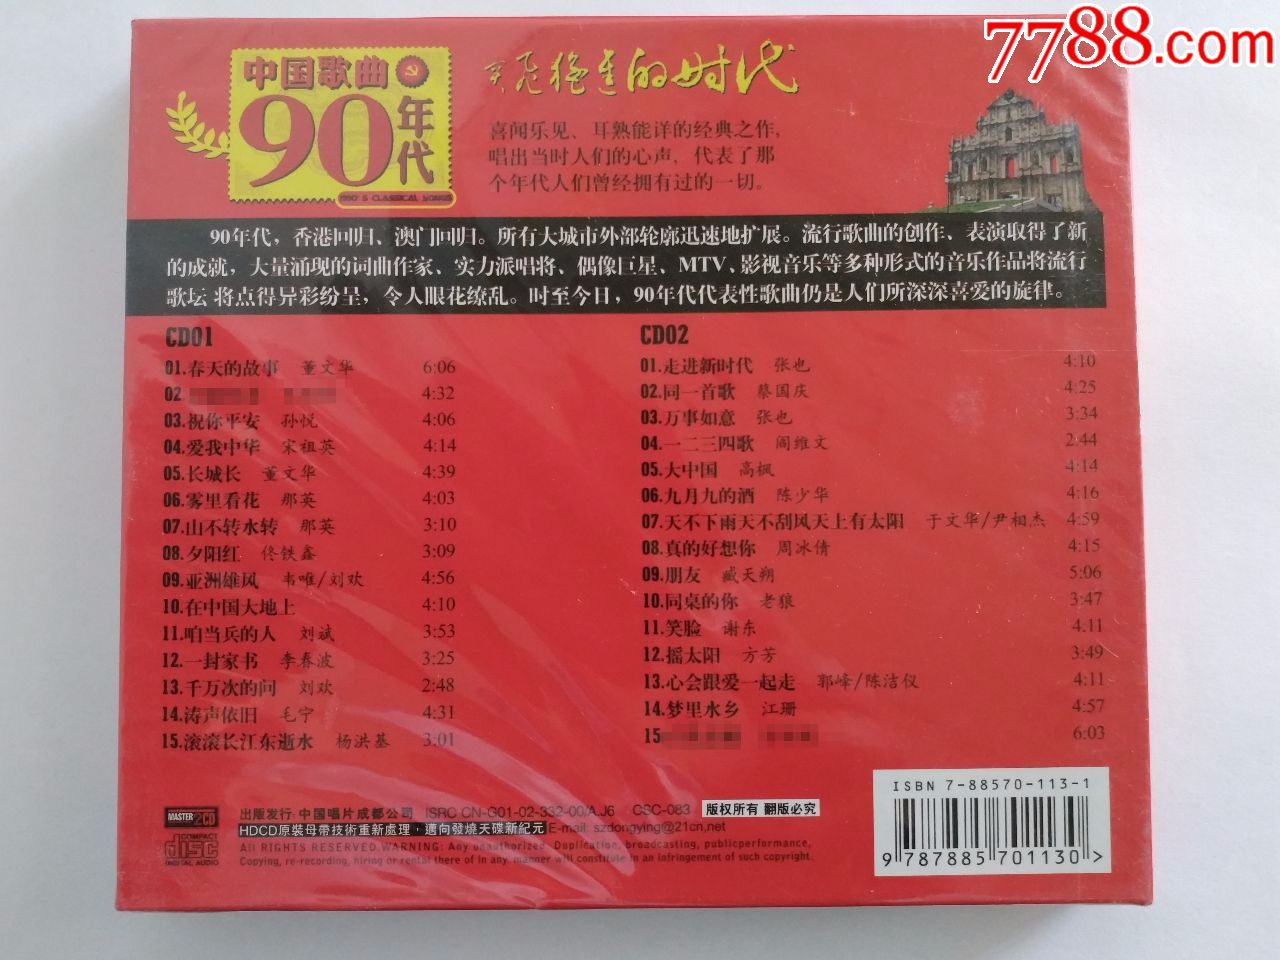 [CD]《世纪歌典90年代》通俗流行歌曲,歌星原